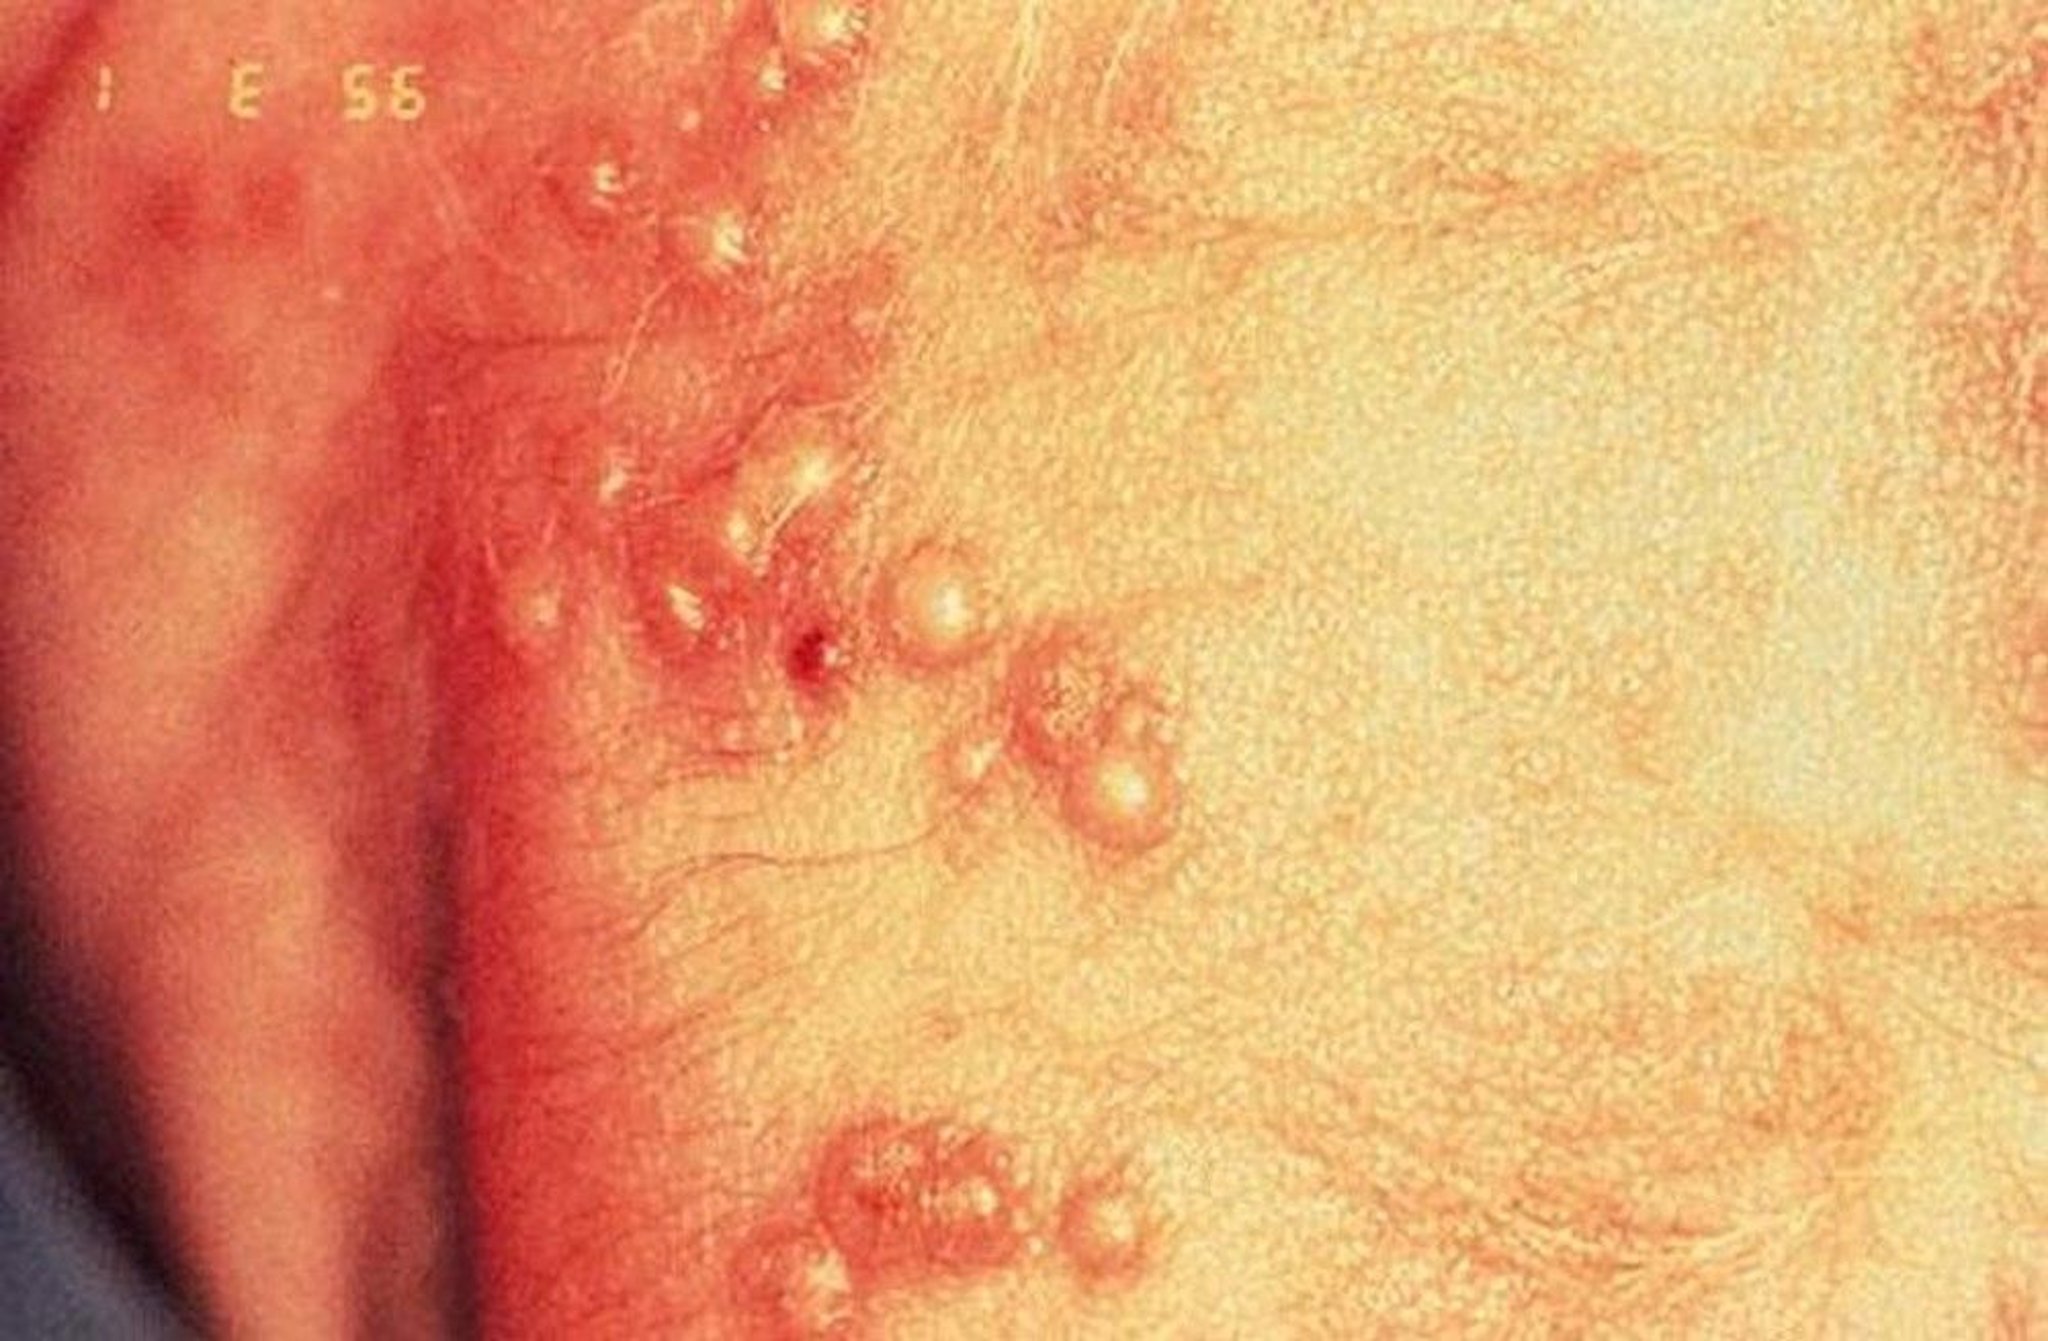 Herpes Simplex Virus Infection in the Newborn